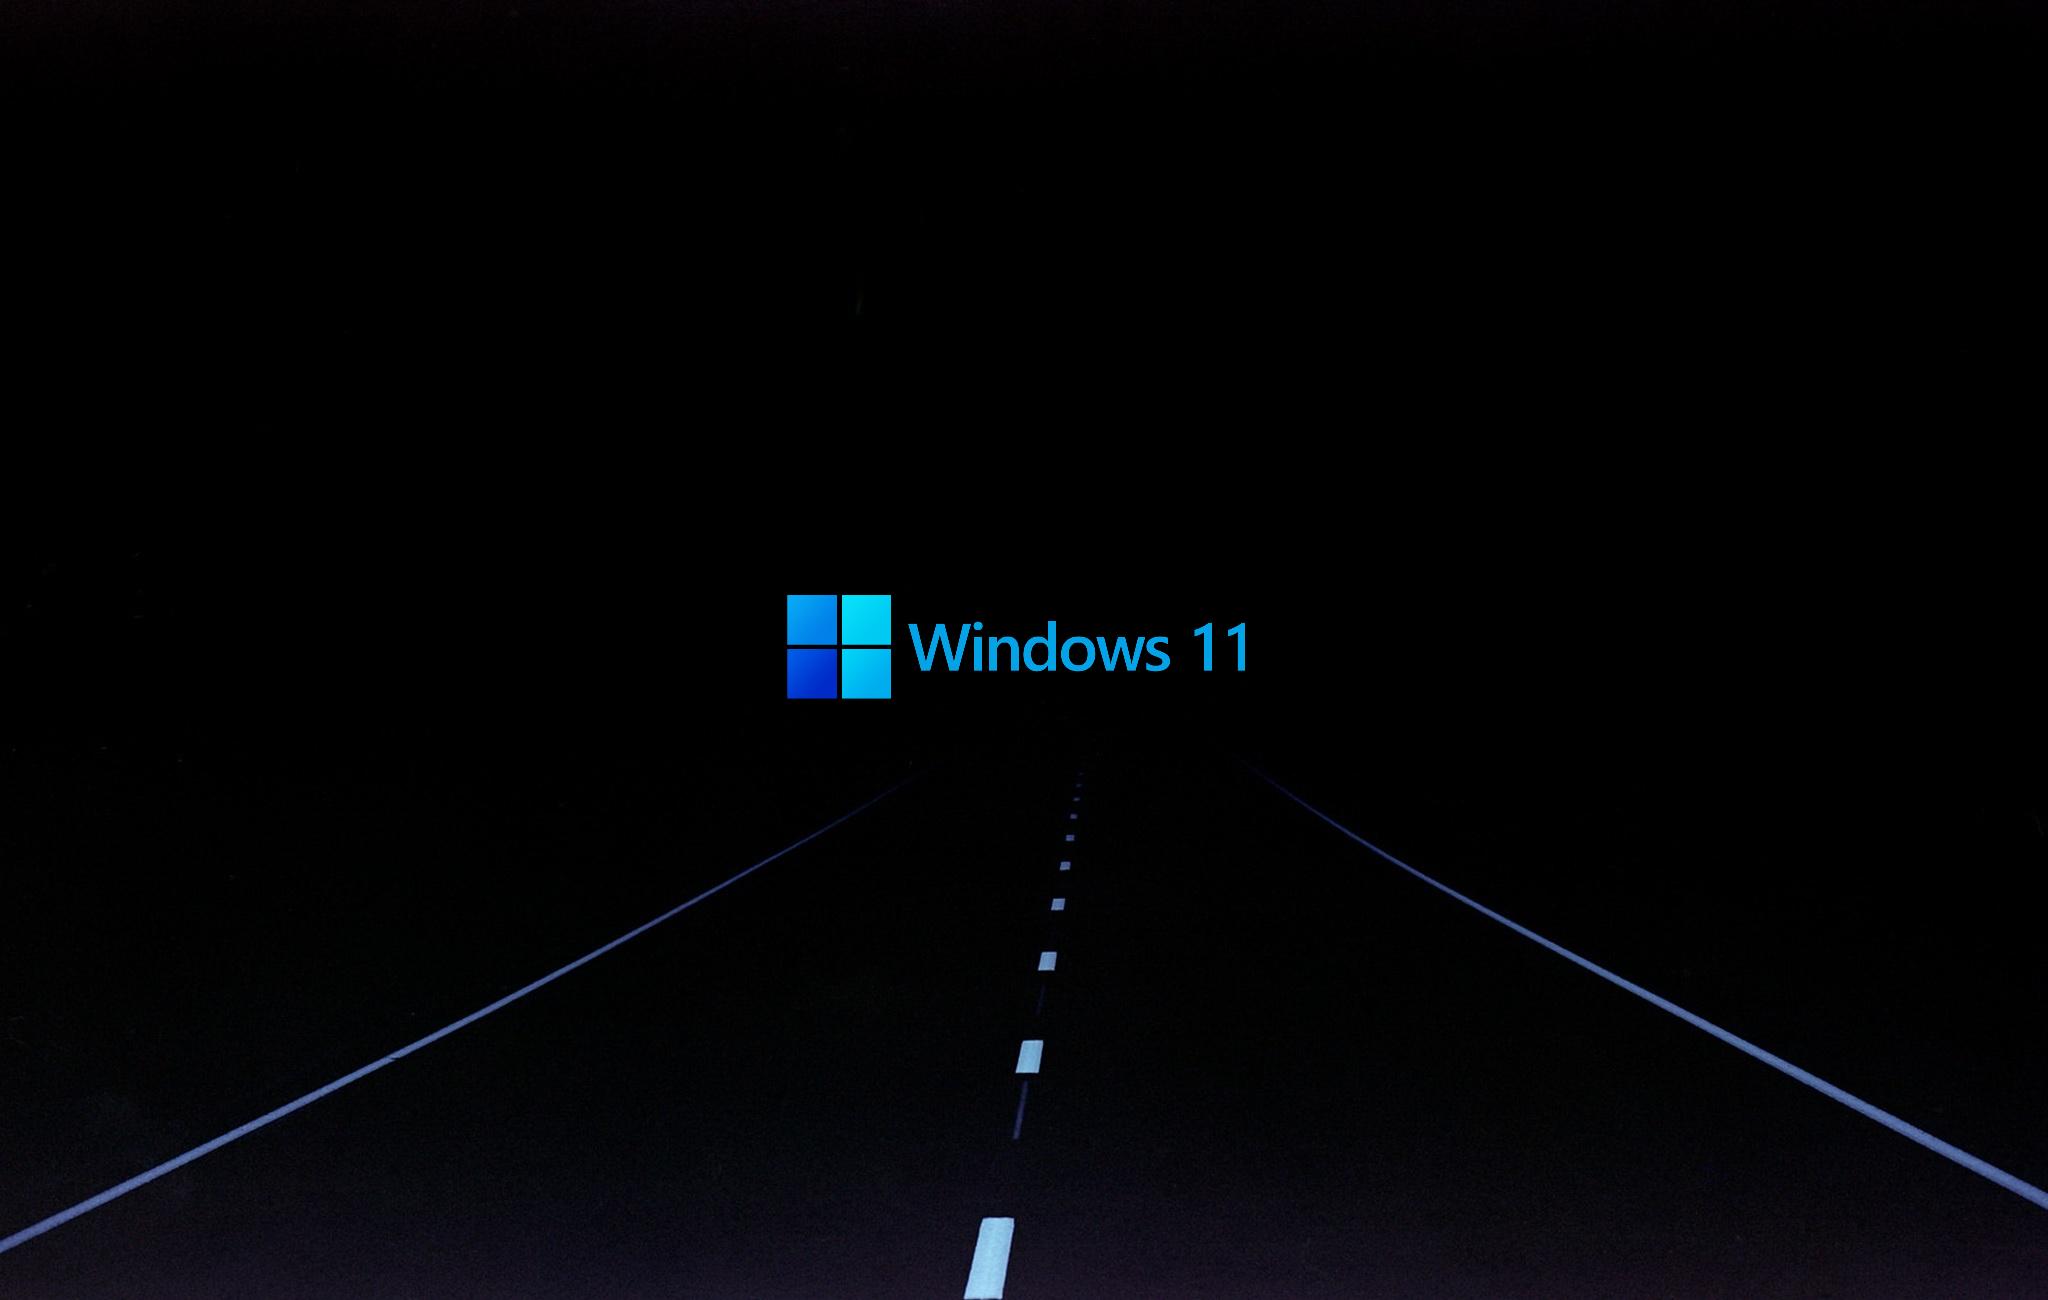 General 2048x1300 operating system logo Windows 11 road simple background minimalism Microsoft Windows